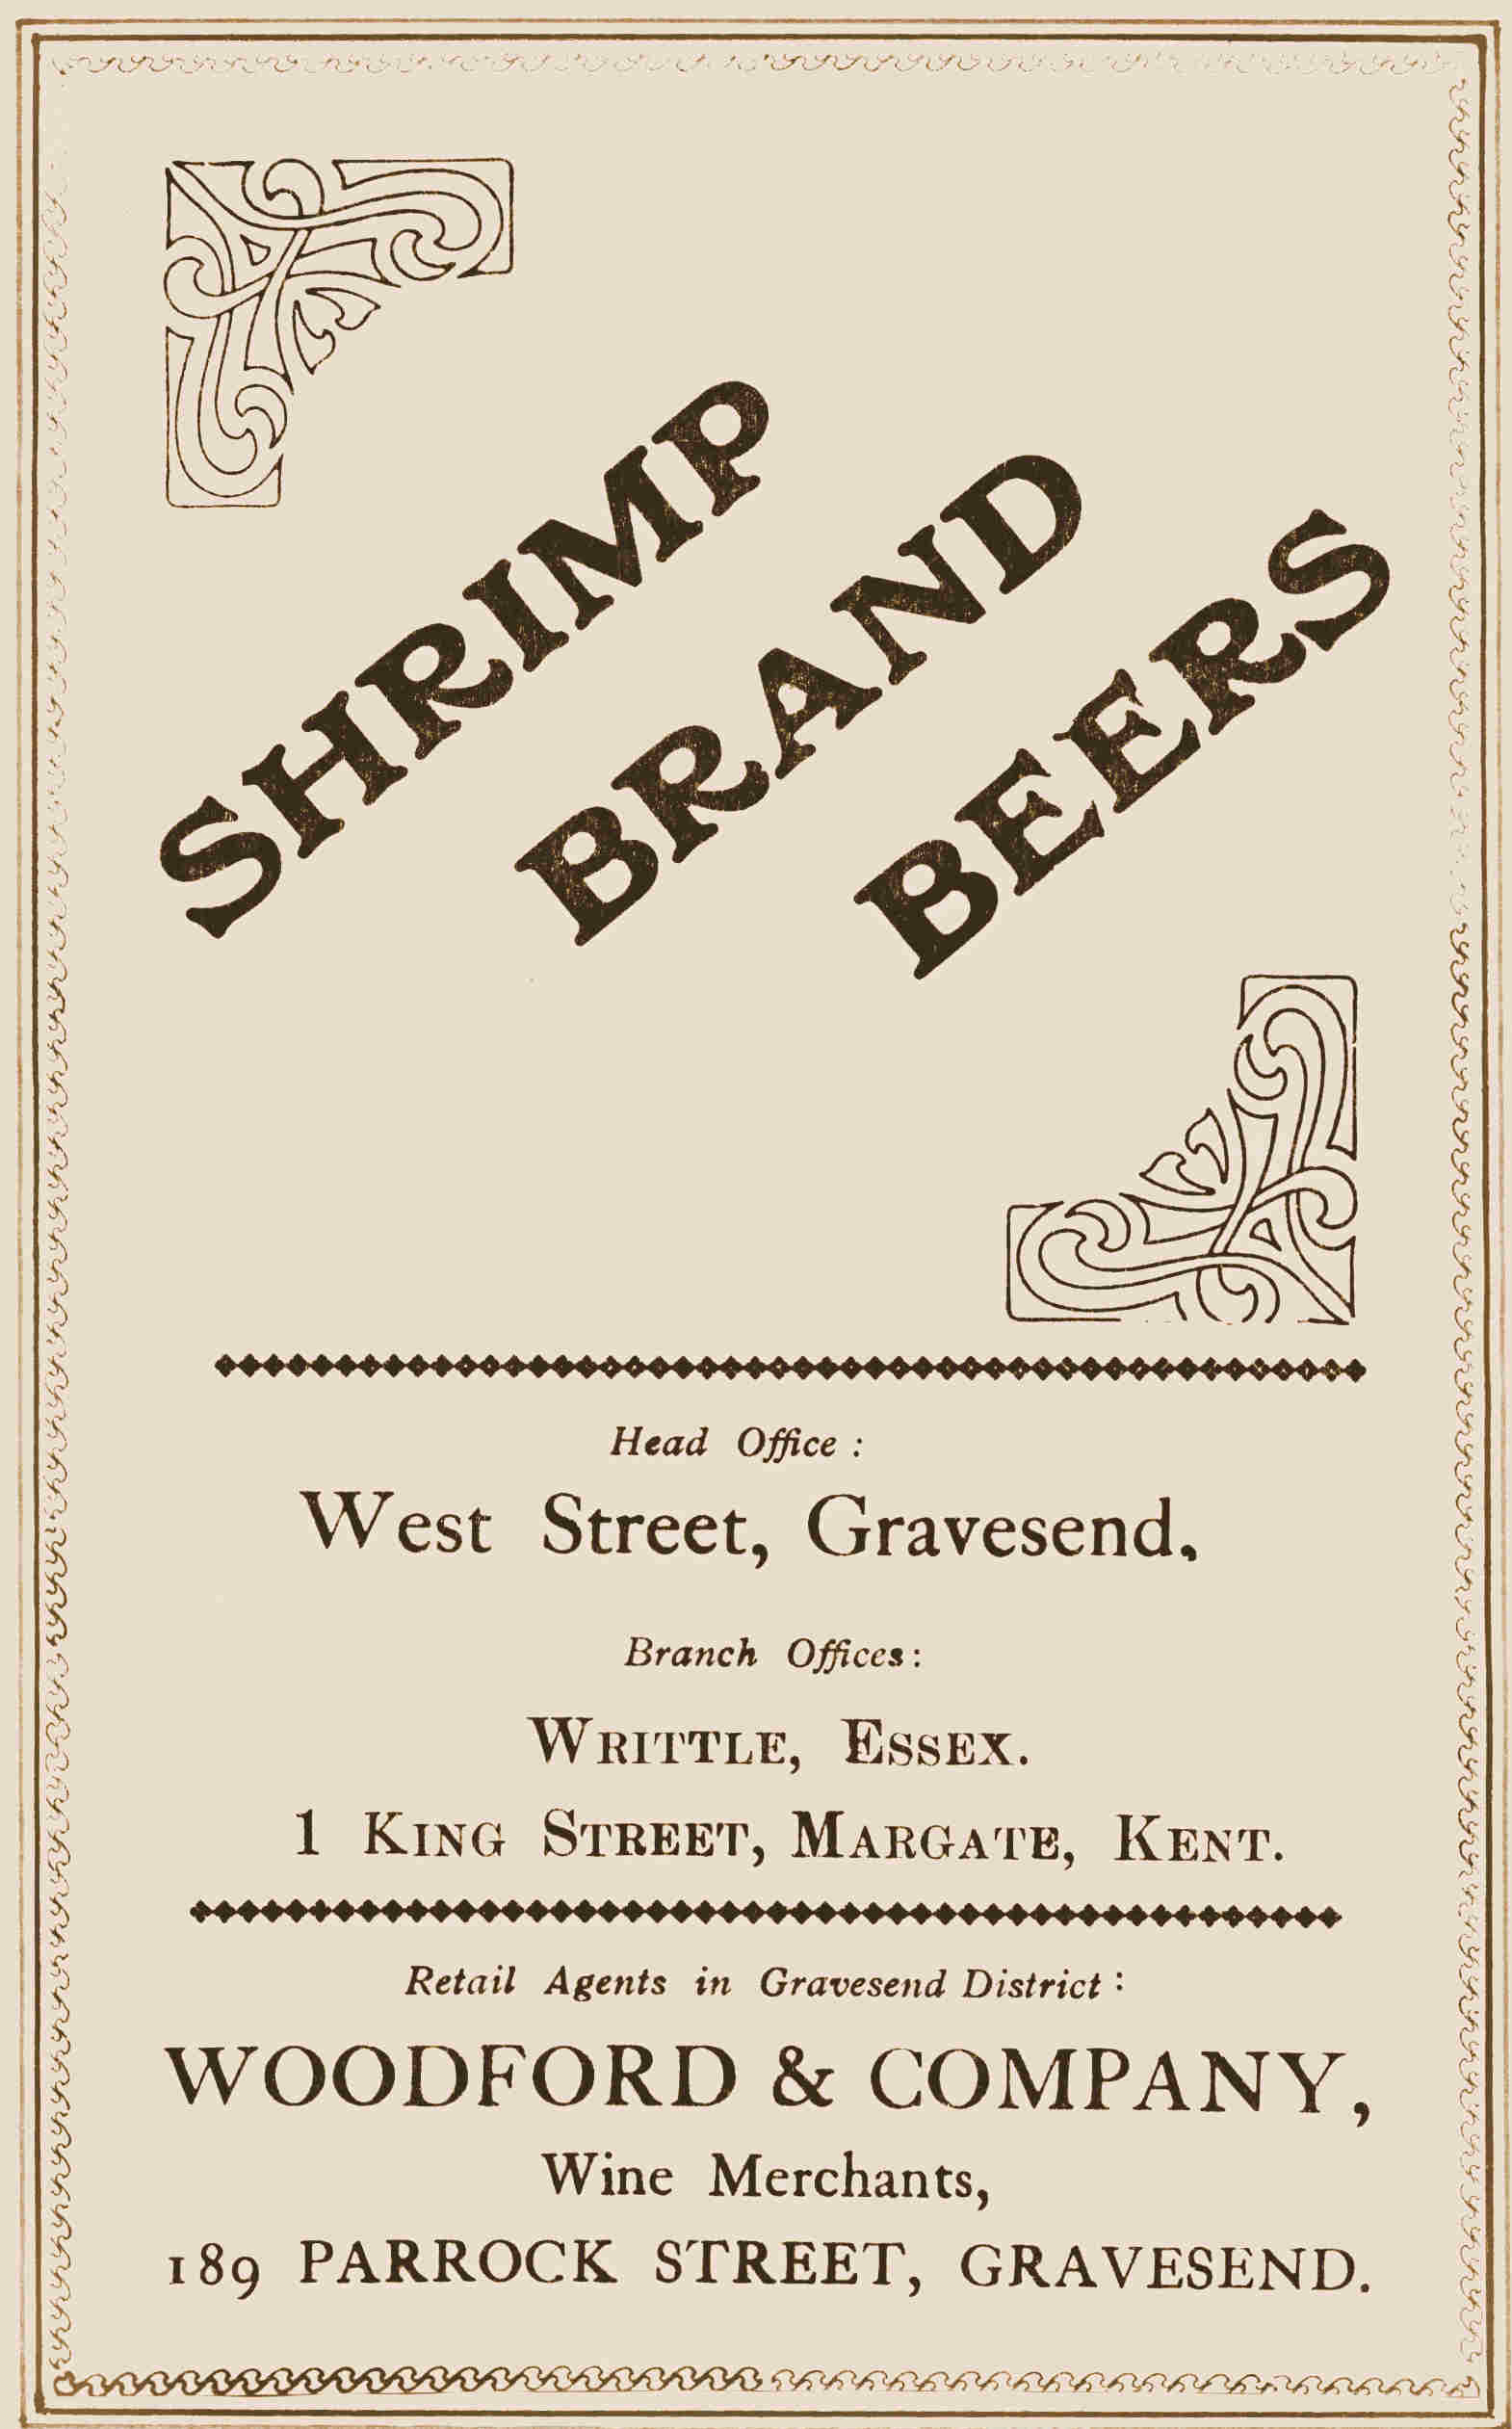 An advert from 1905